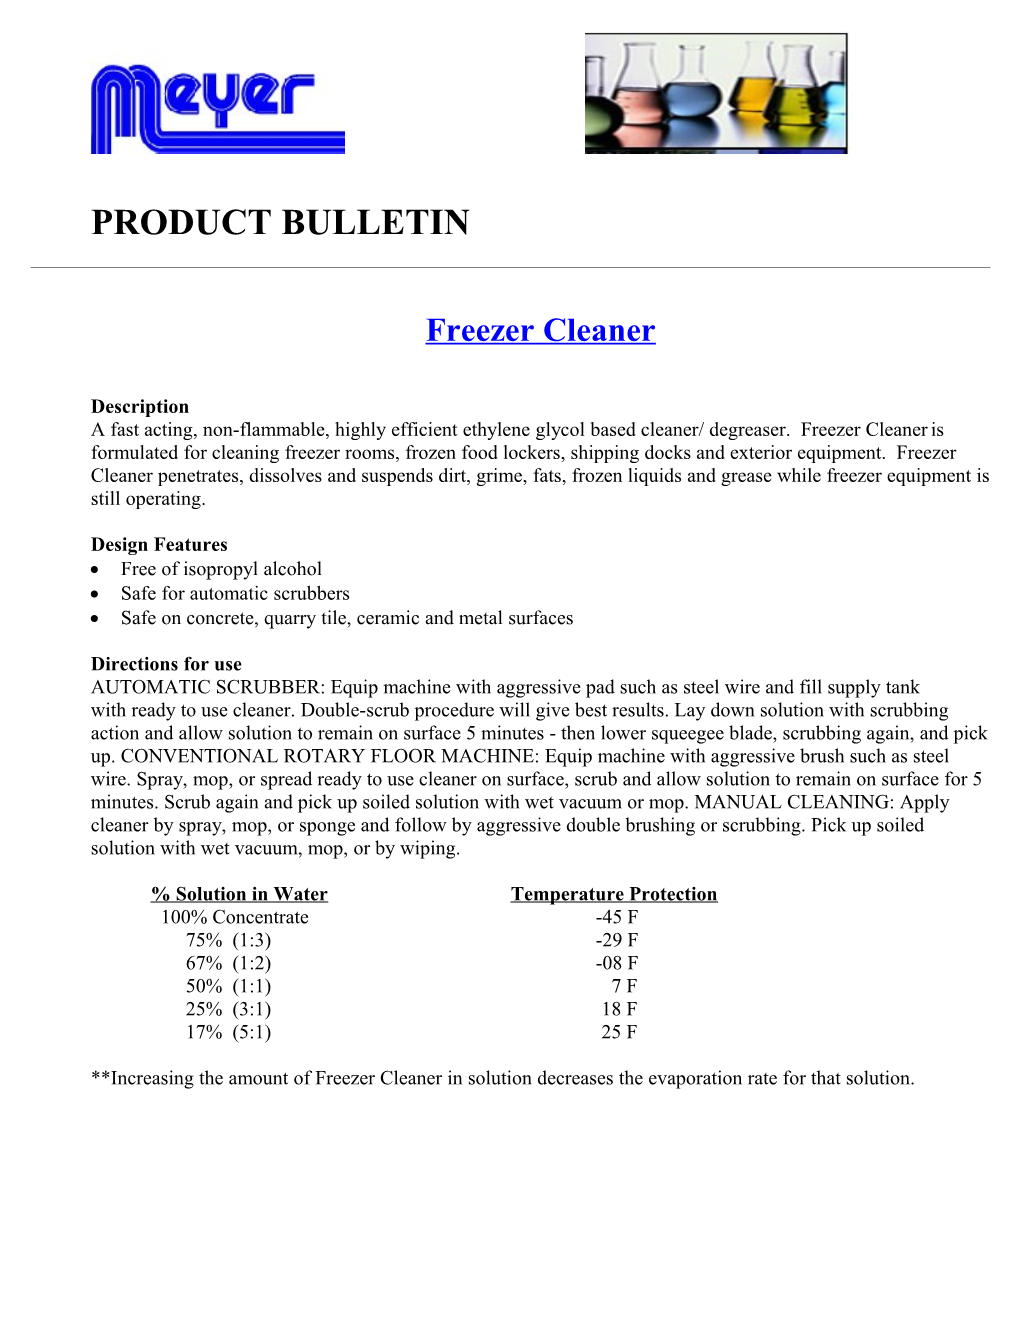 Product Bulletin s1